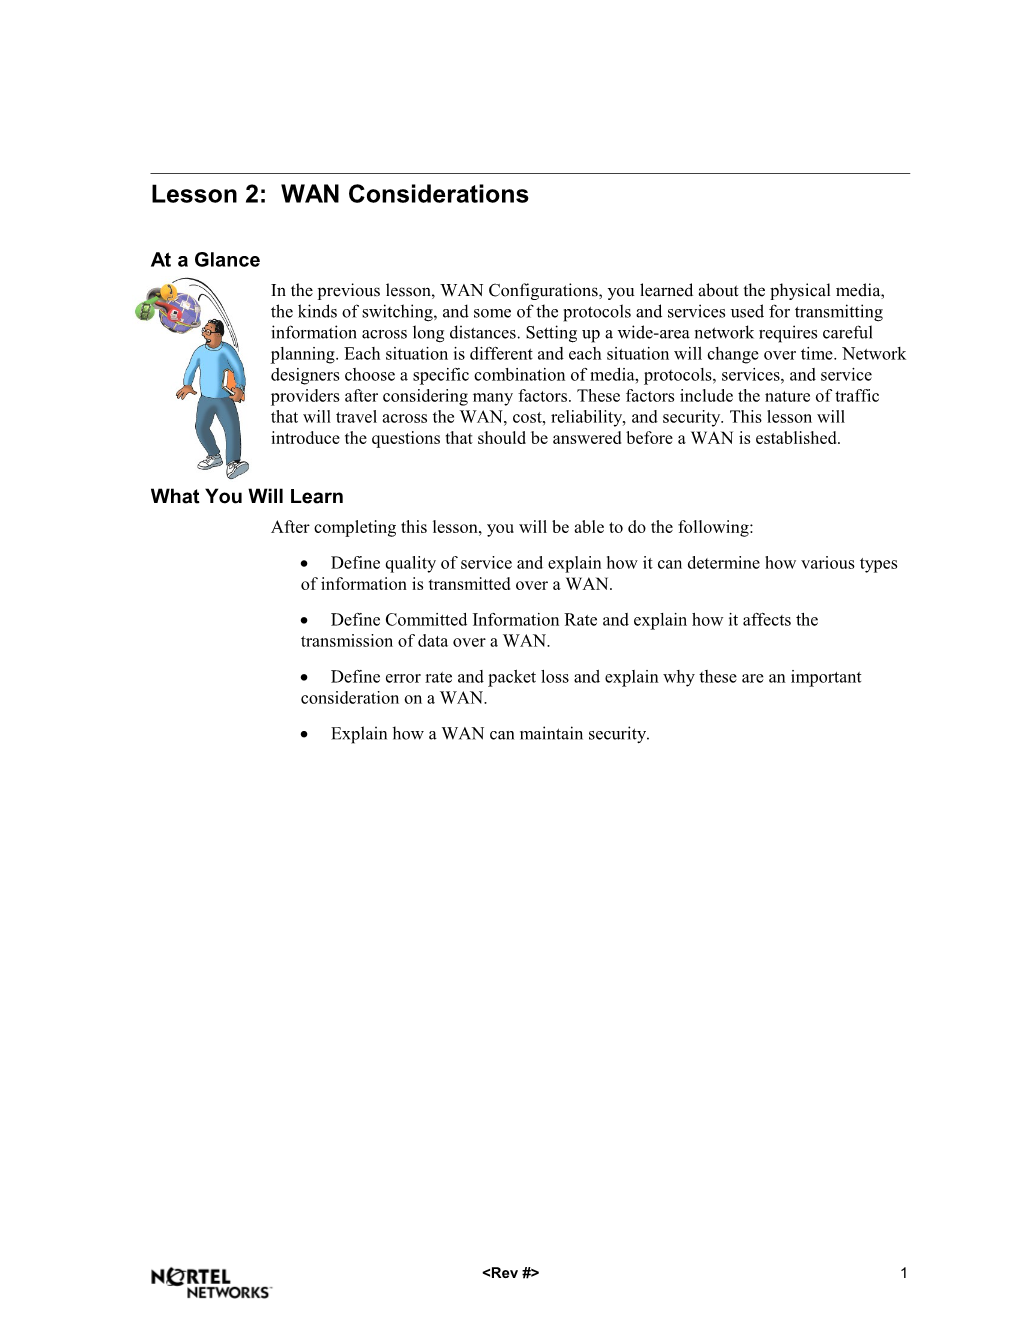 Unit 3 Lesson 2: WAN Considerations